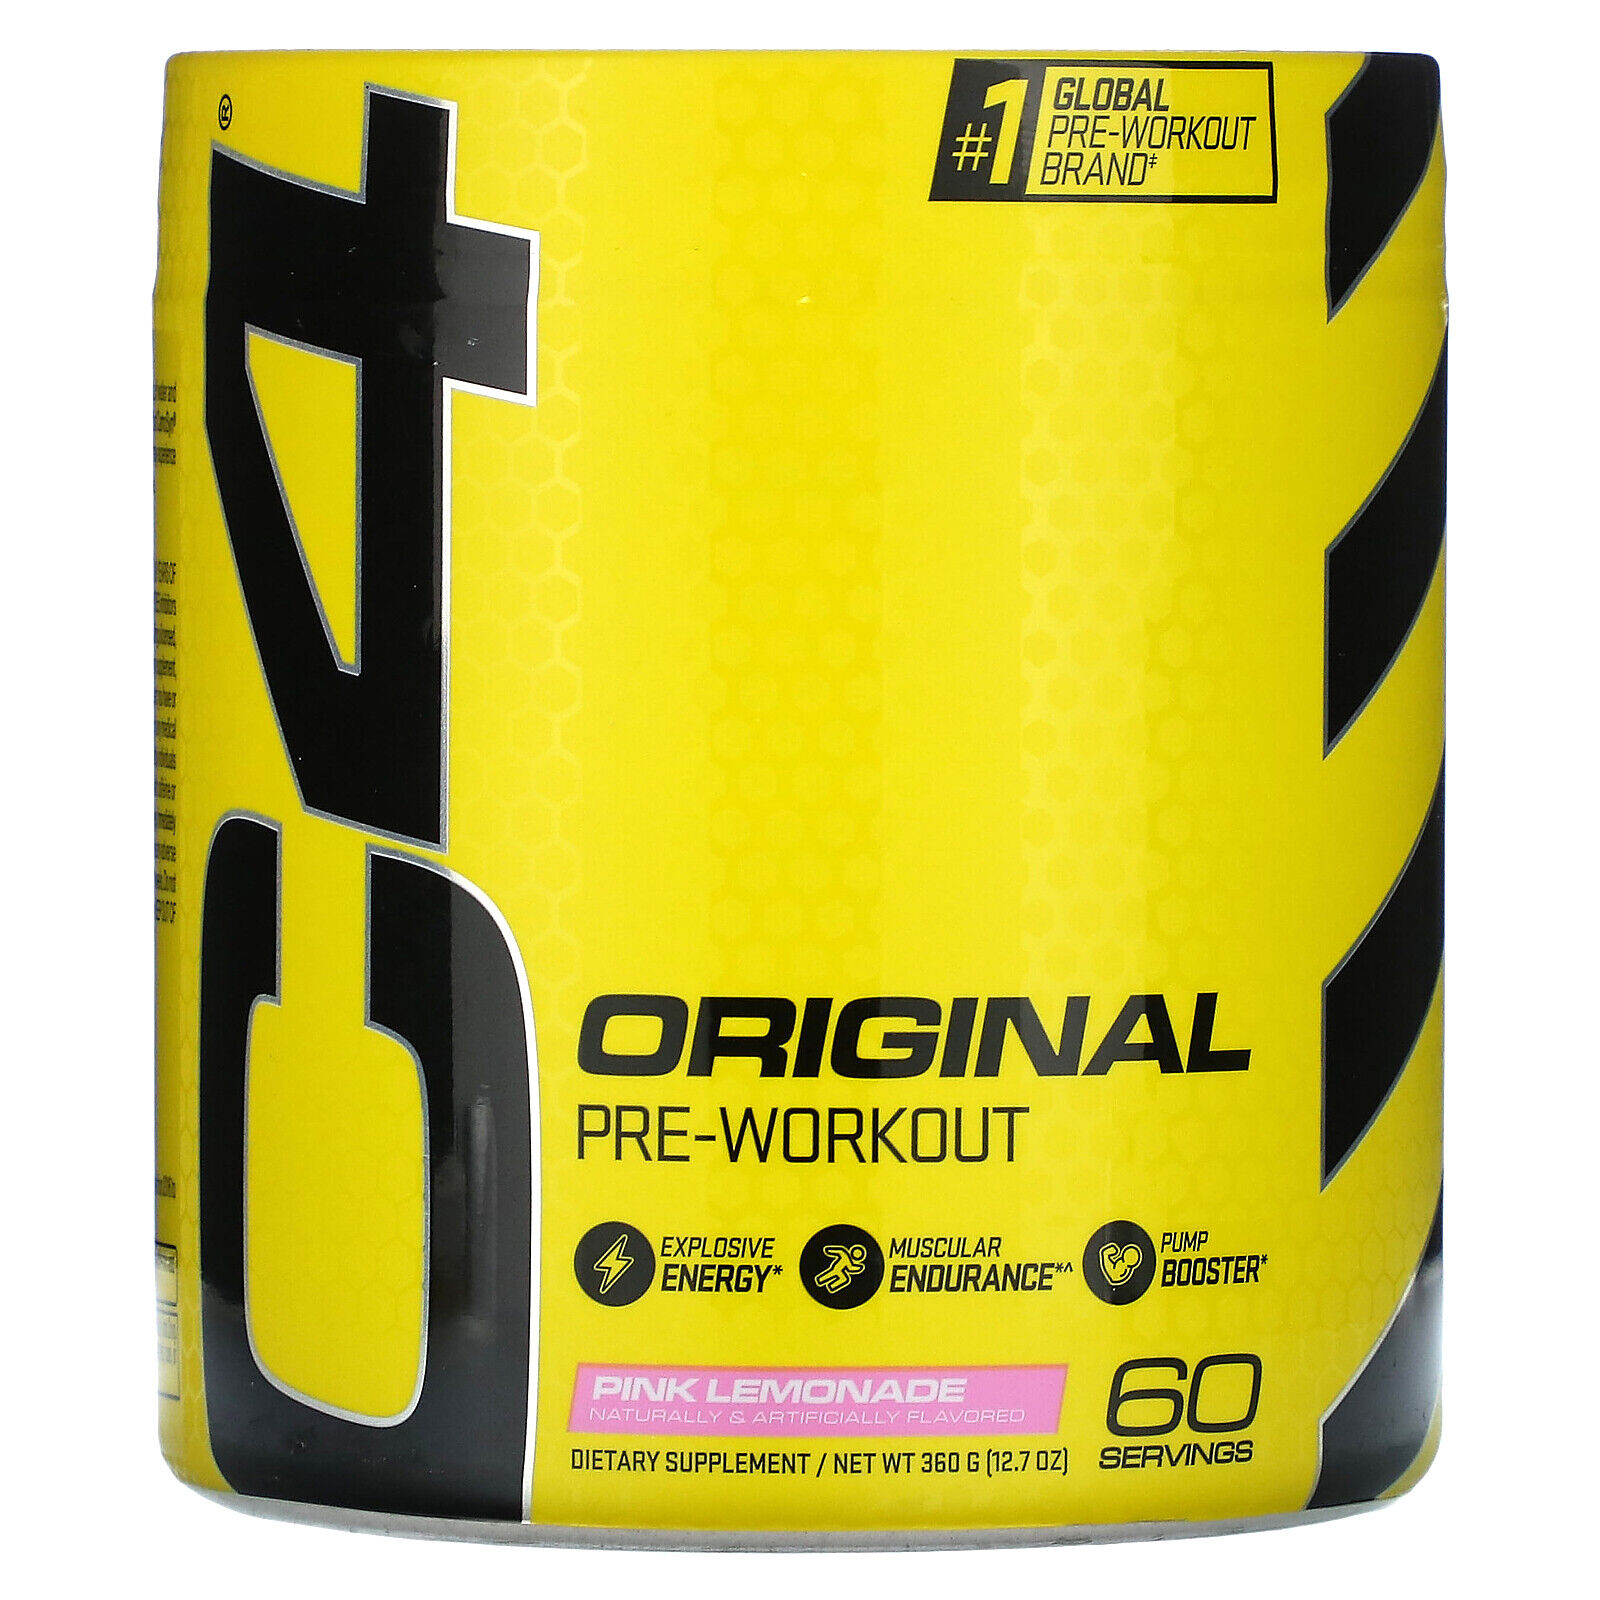 C4 Original, Pre-Workout, Pink Lemonade, 12.7 oz (360 g)